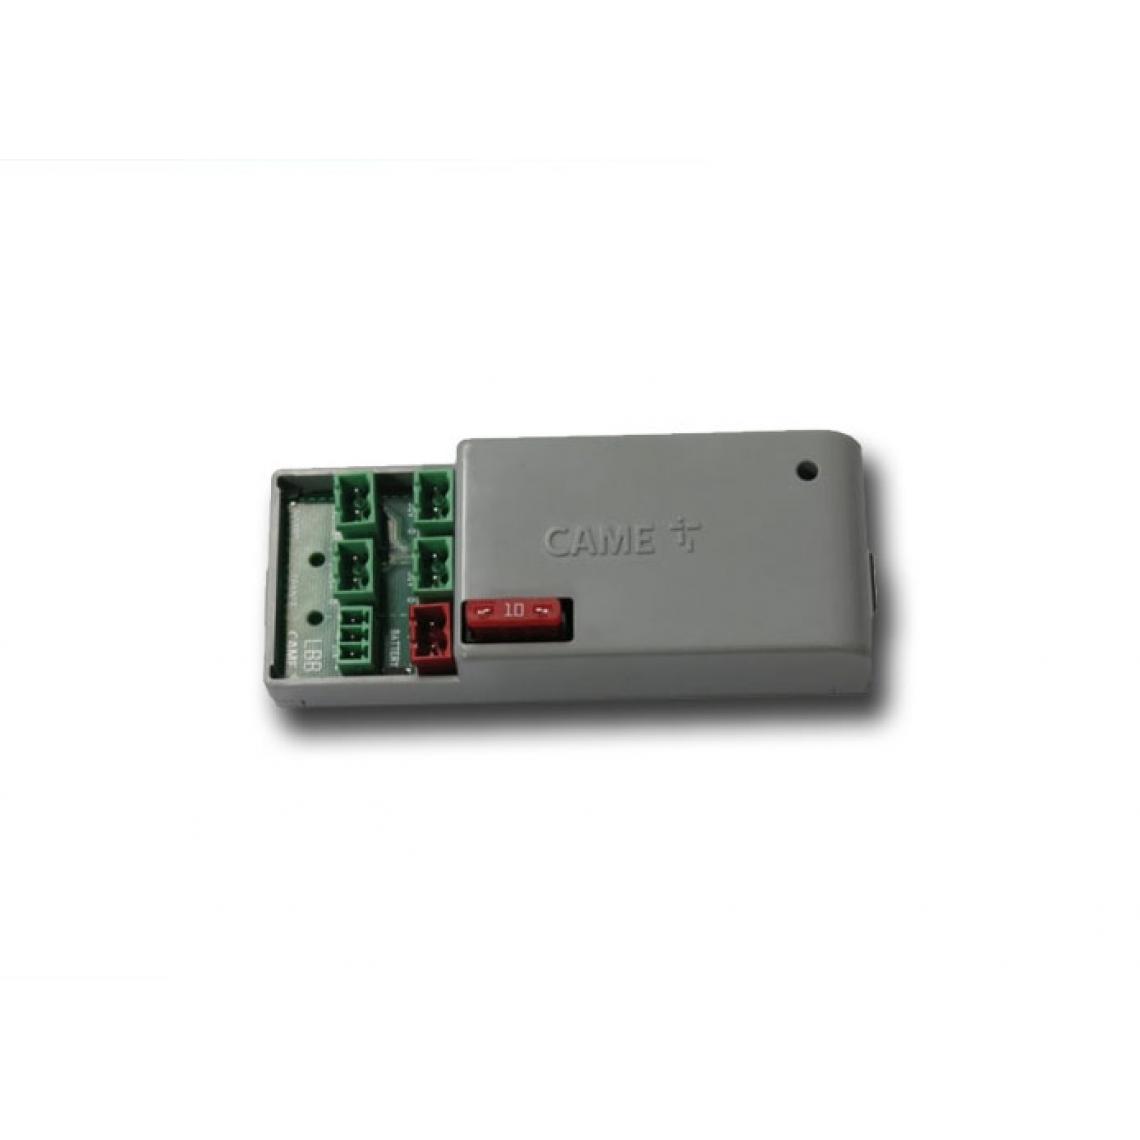 Came - came kit carte recharge batteries bkv 806sa-0090 - Motorisation de portail